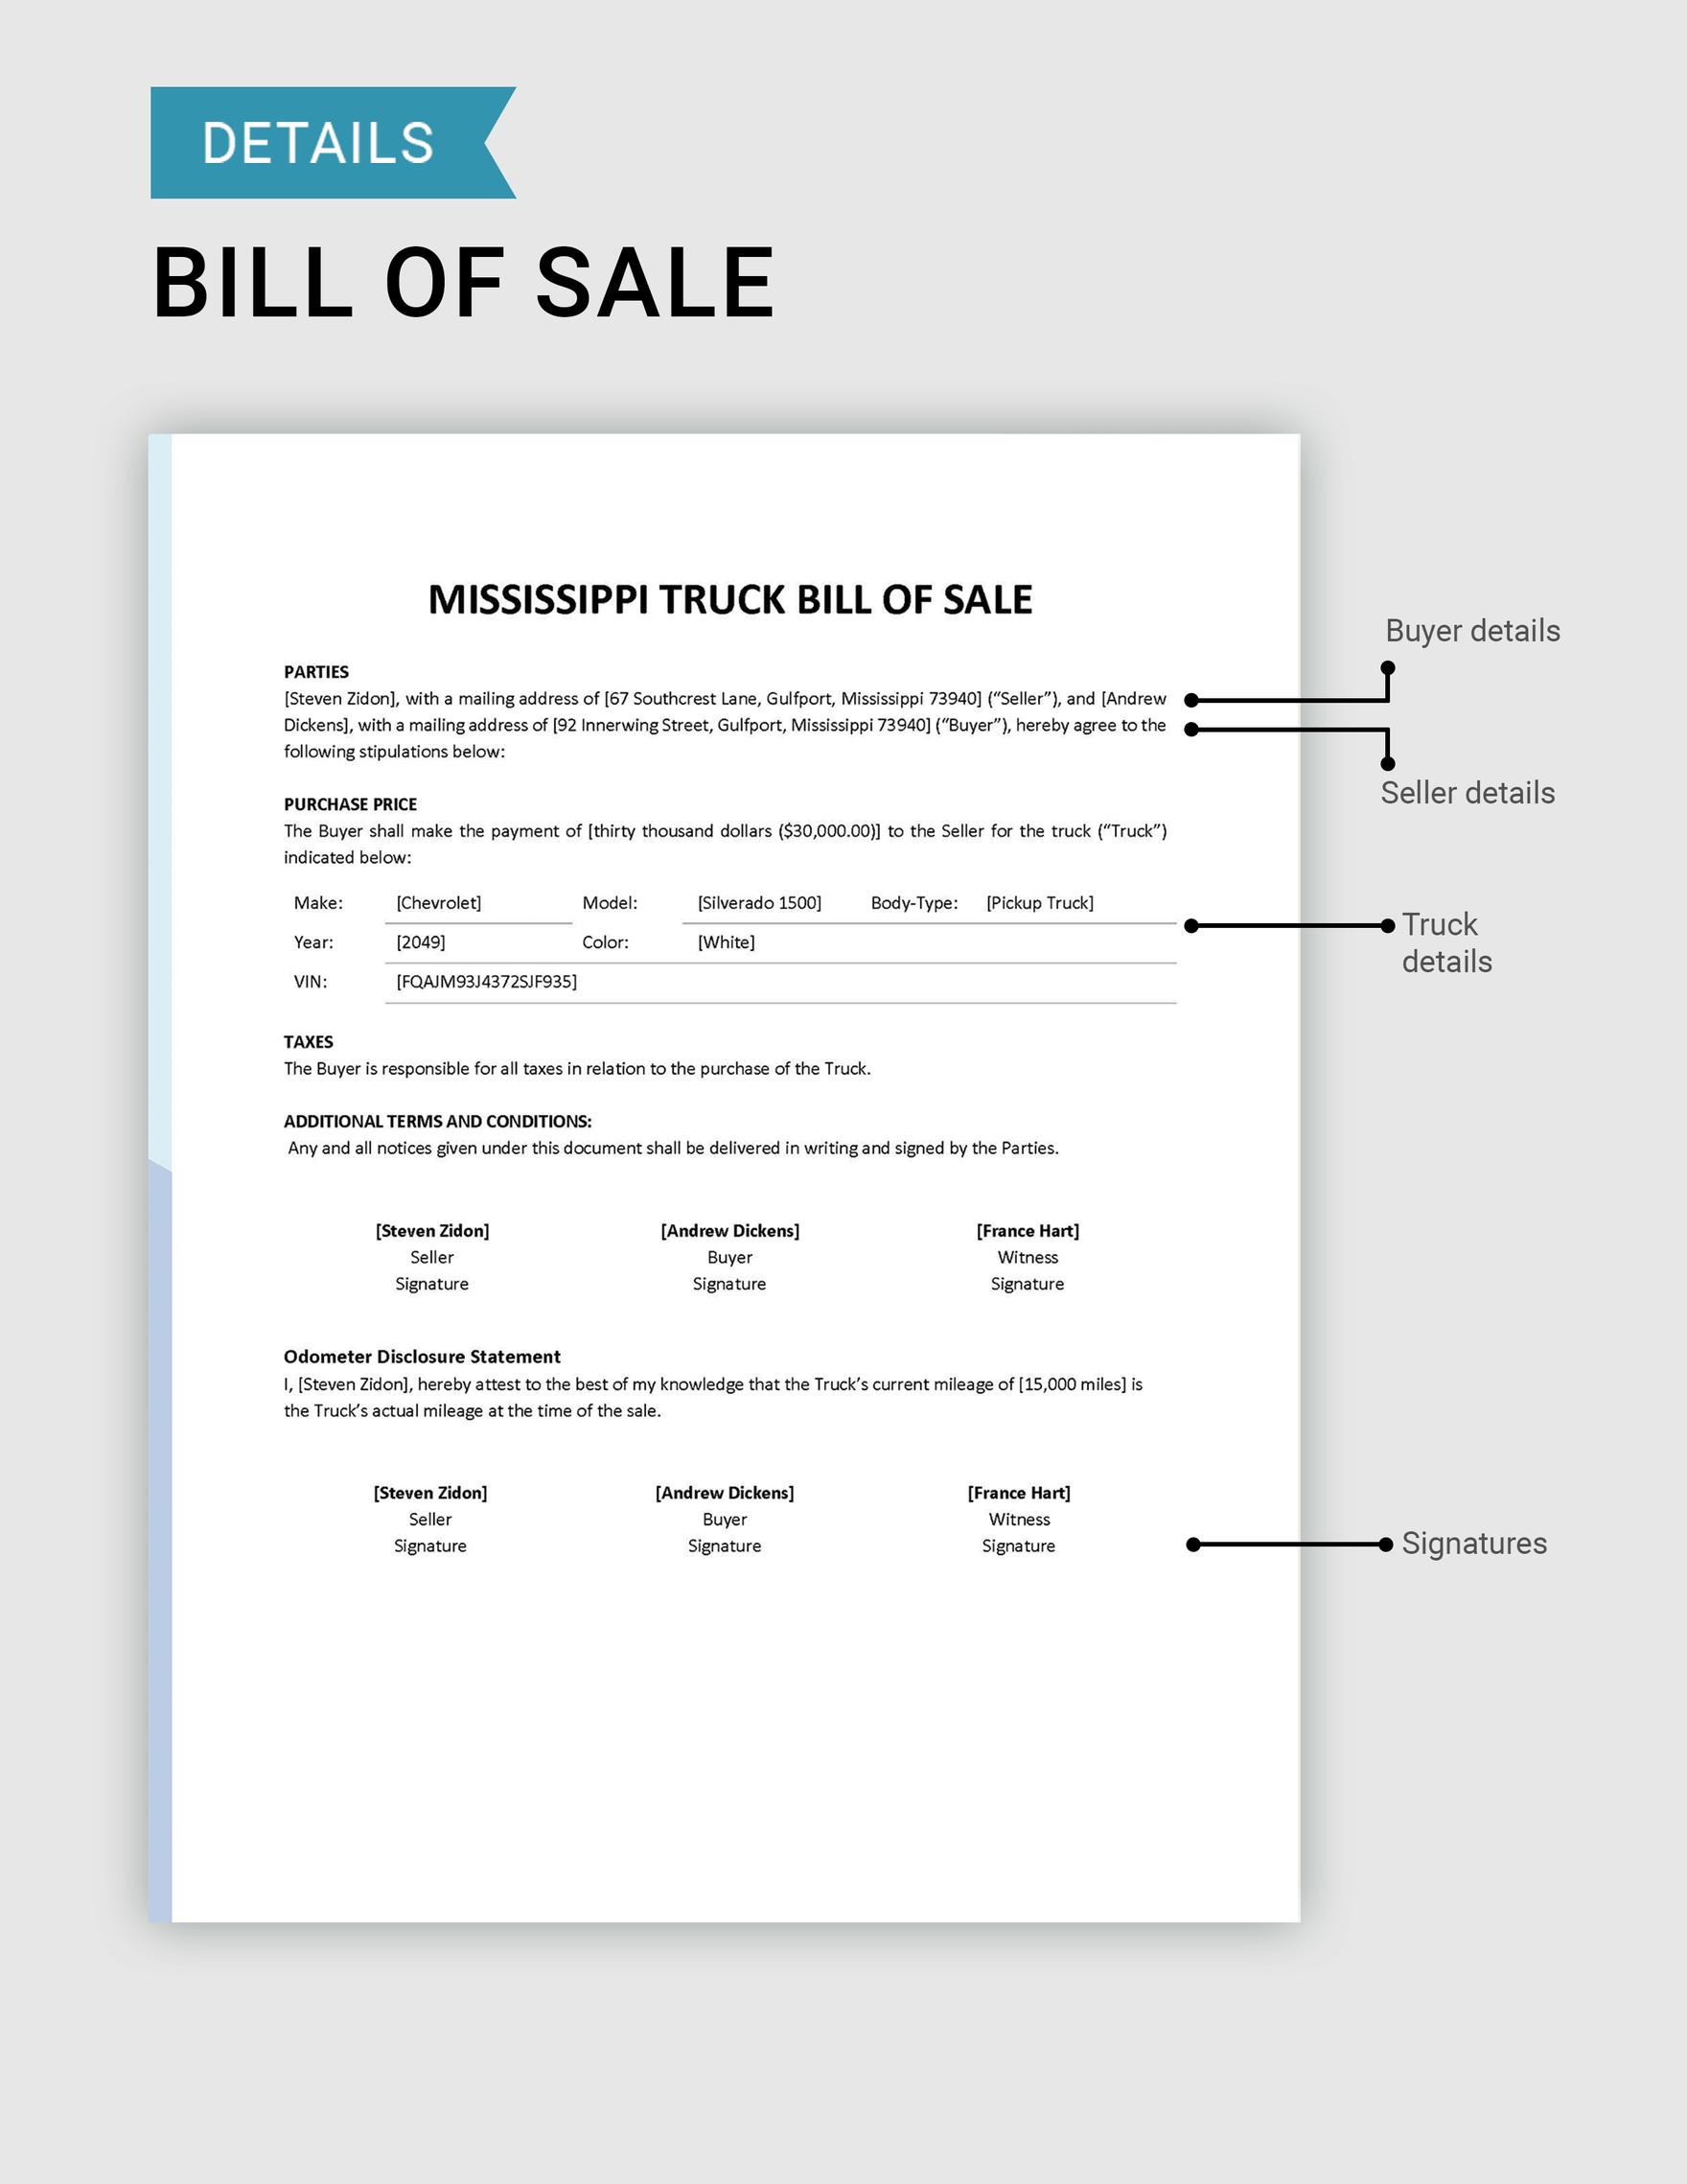 Mississippi Truck Bill of Sale Template